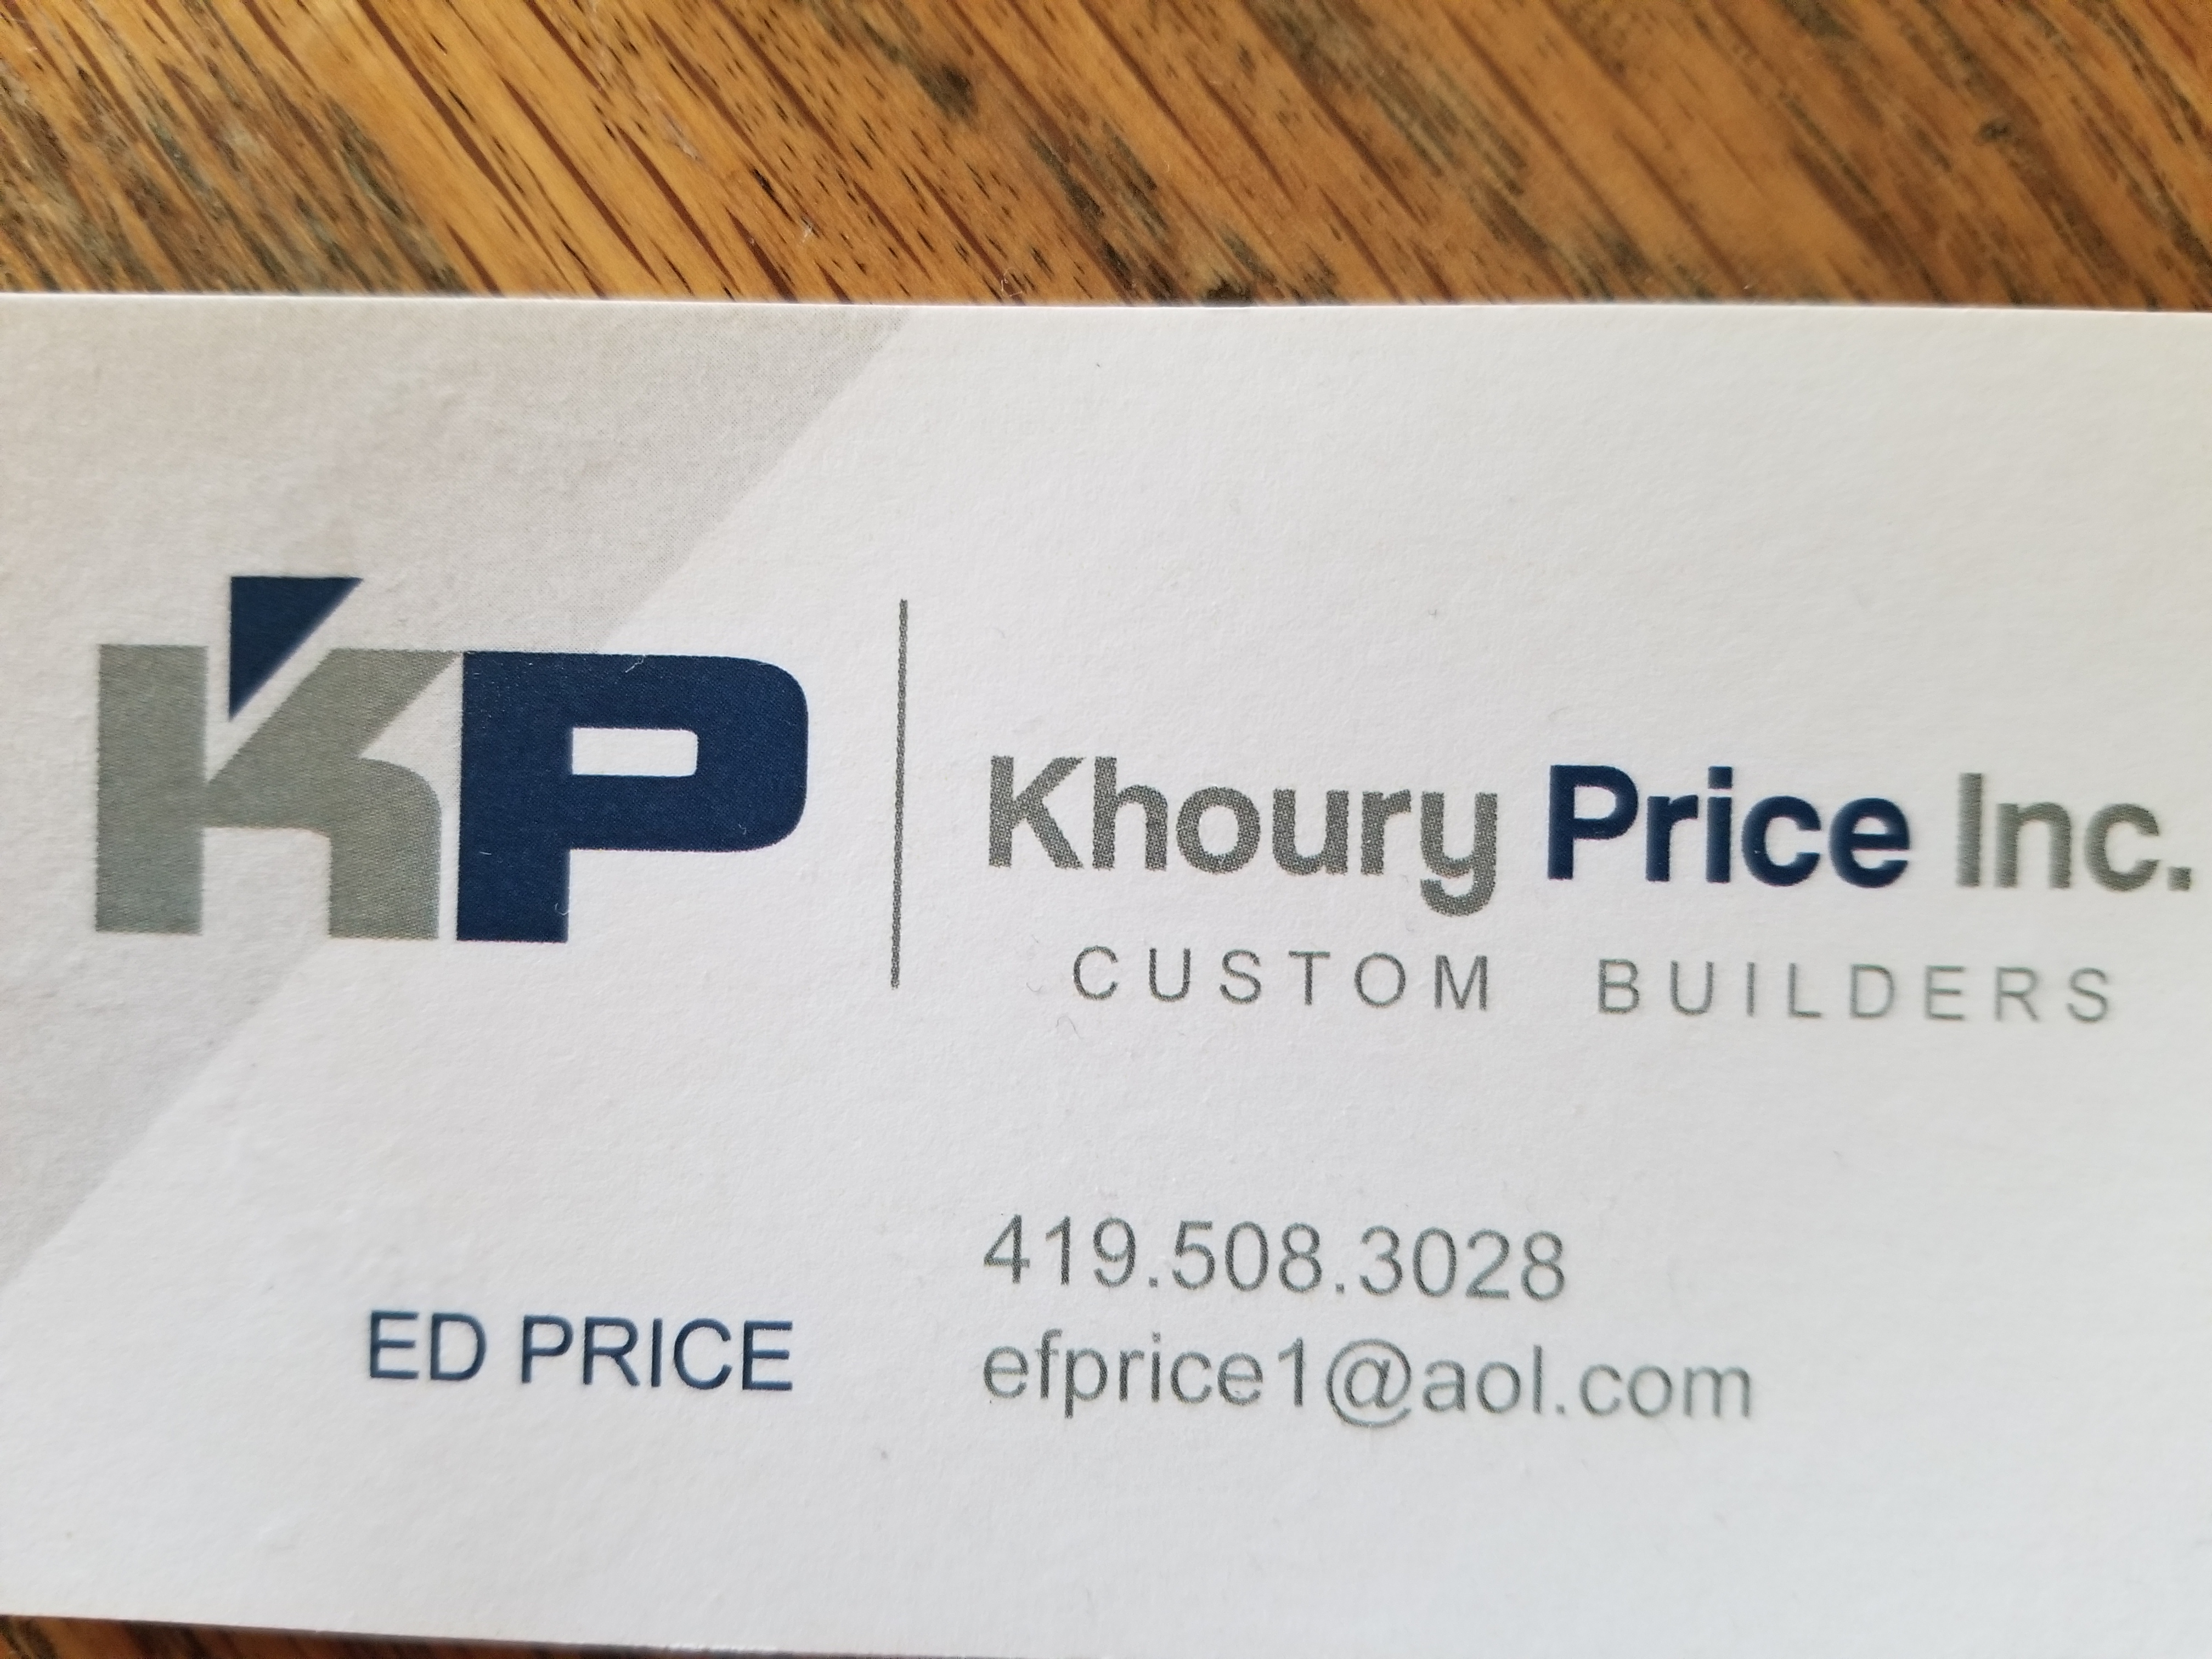 Khoury Price, Inc. Logo